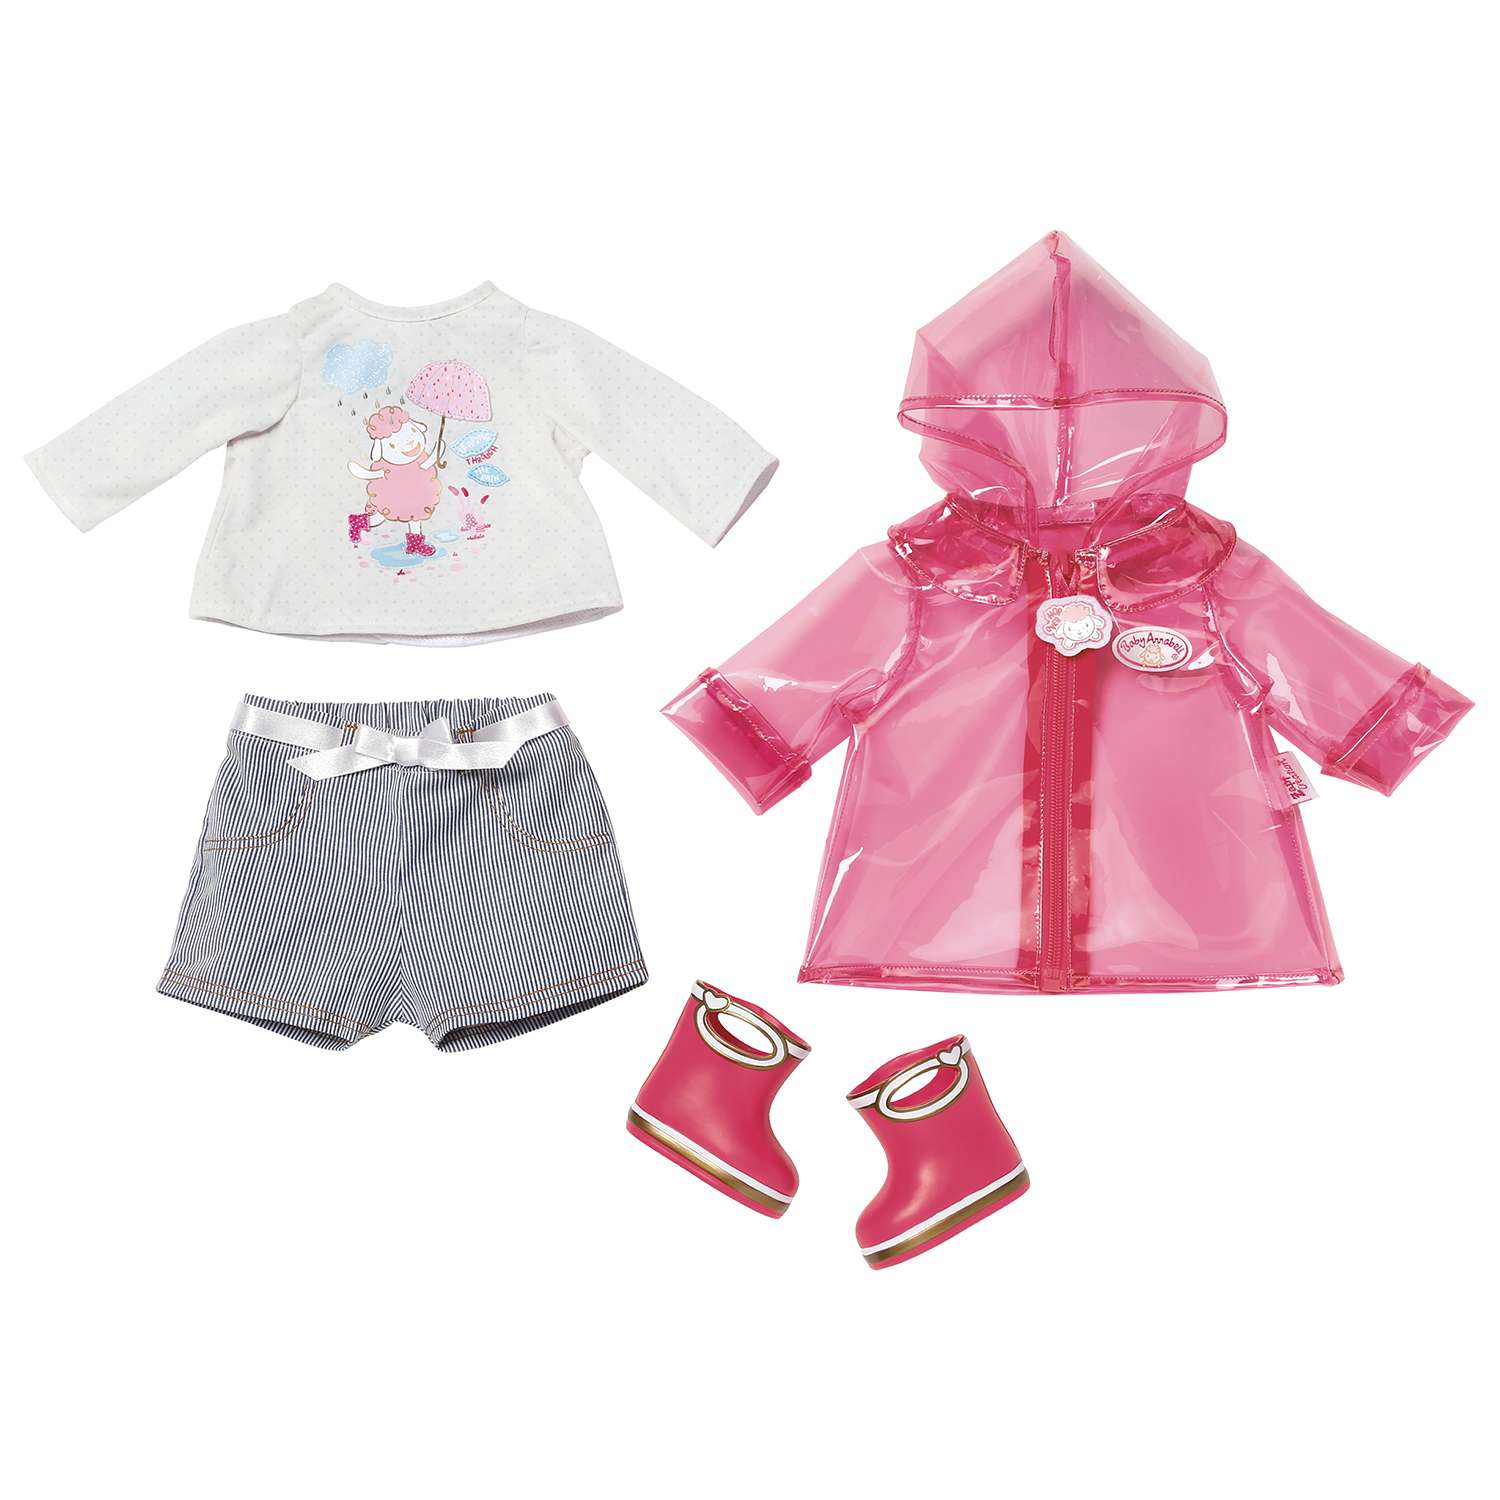 Одежда для куклы Zapf Creation Baby Annabell для дождливой погоды 700-808 700-808 - фото 1